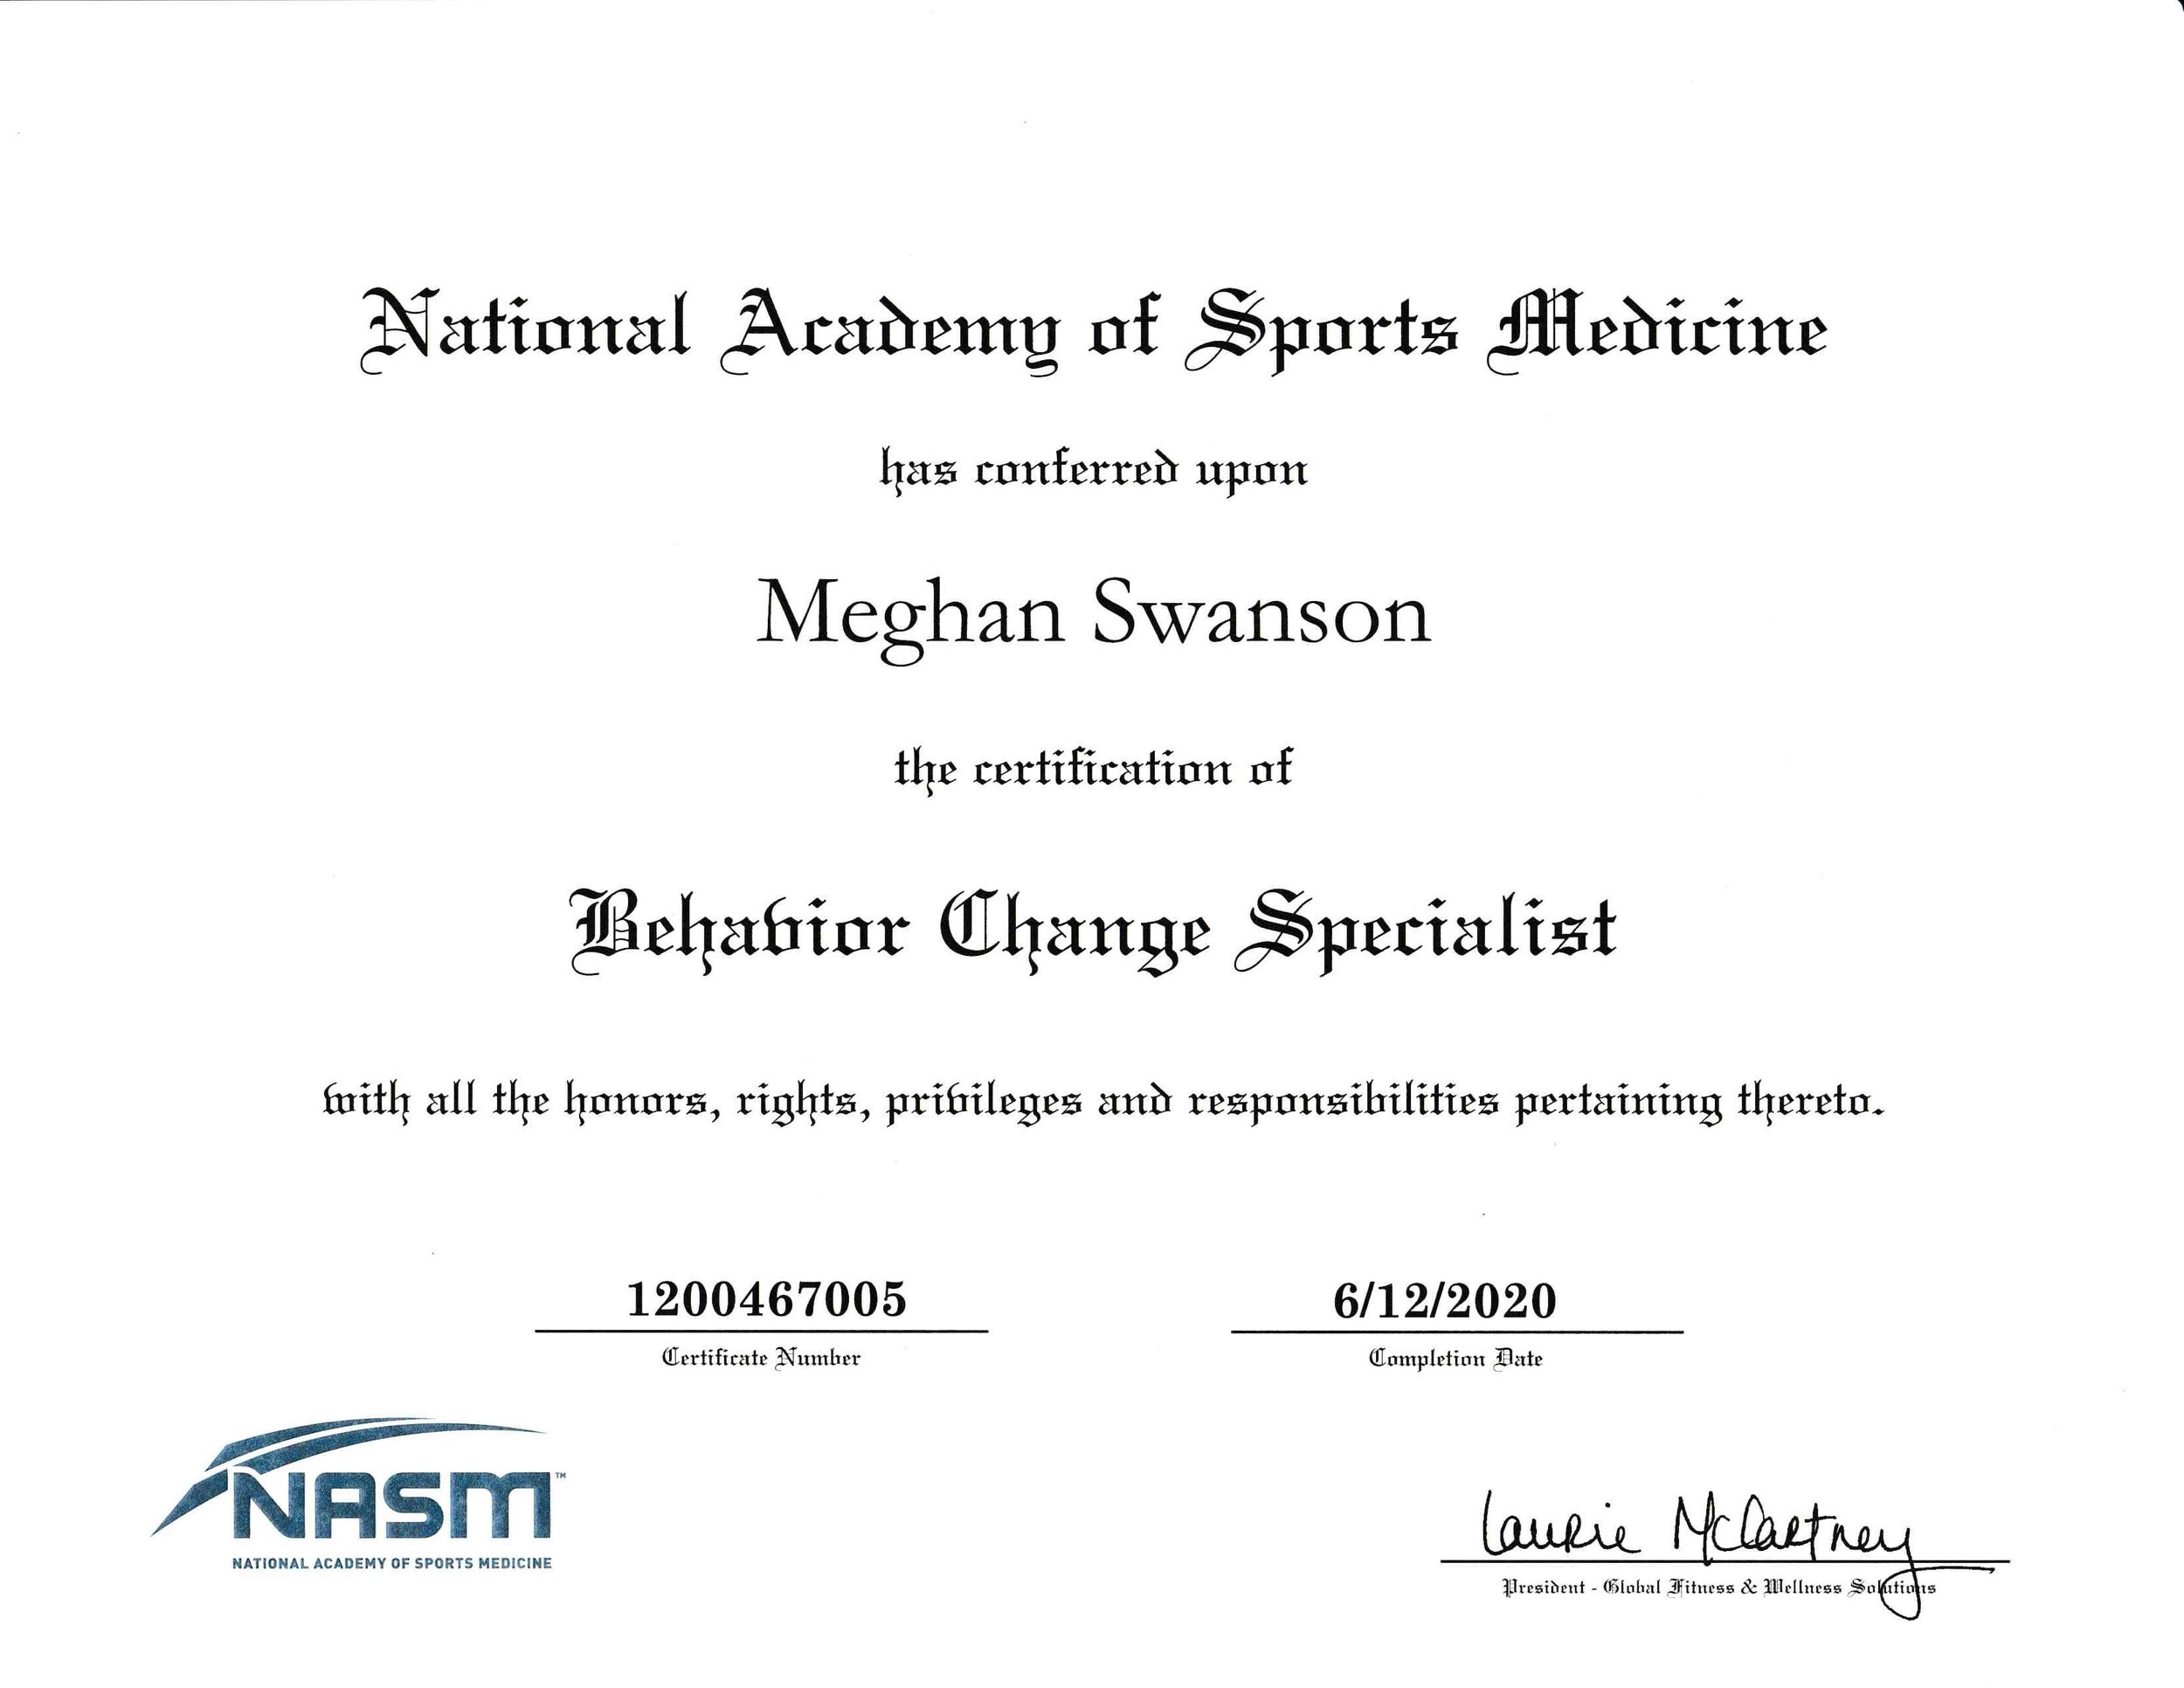 Meghan Swanson - NASM Behavior Change Specialist (Copy)